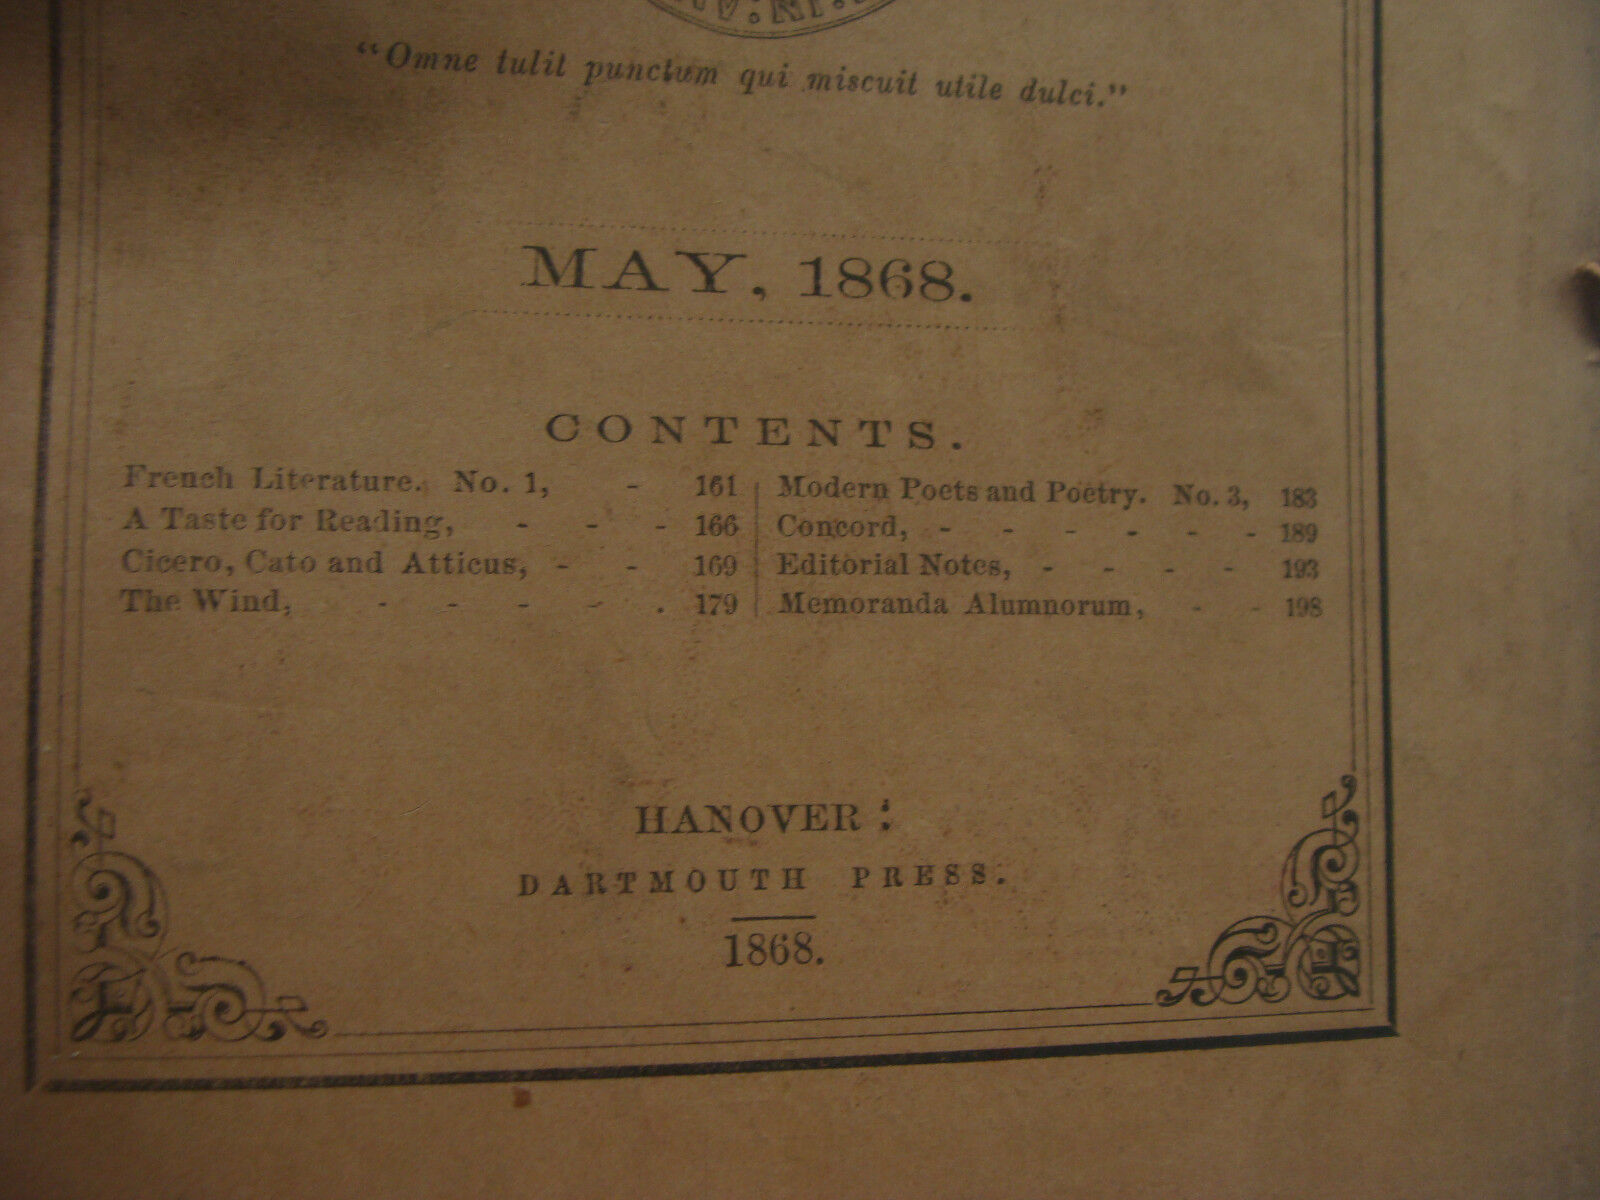 original DARTMOUTH COLLEGE -- may 1868 -- THE DARTMOUTH - 40pgs 